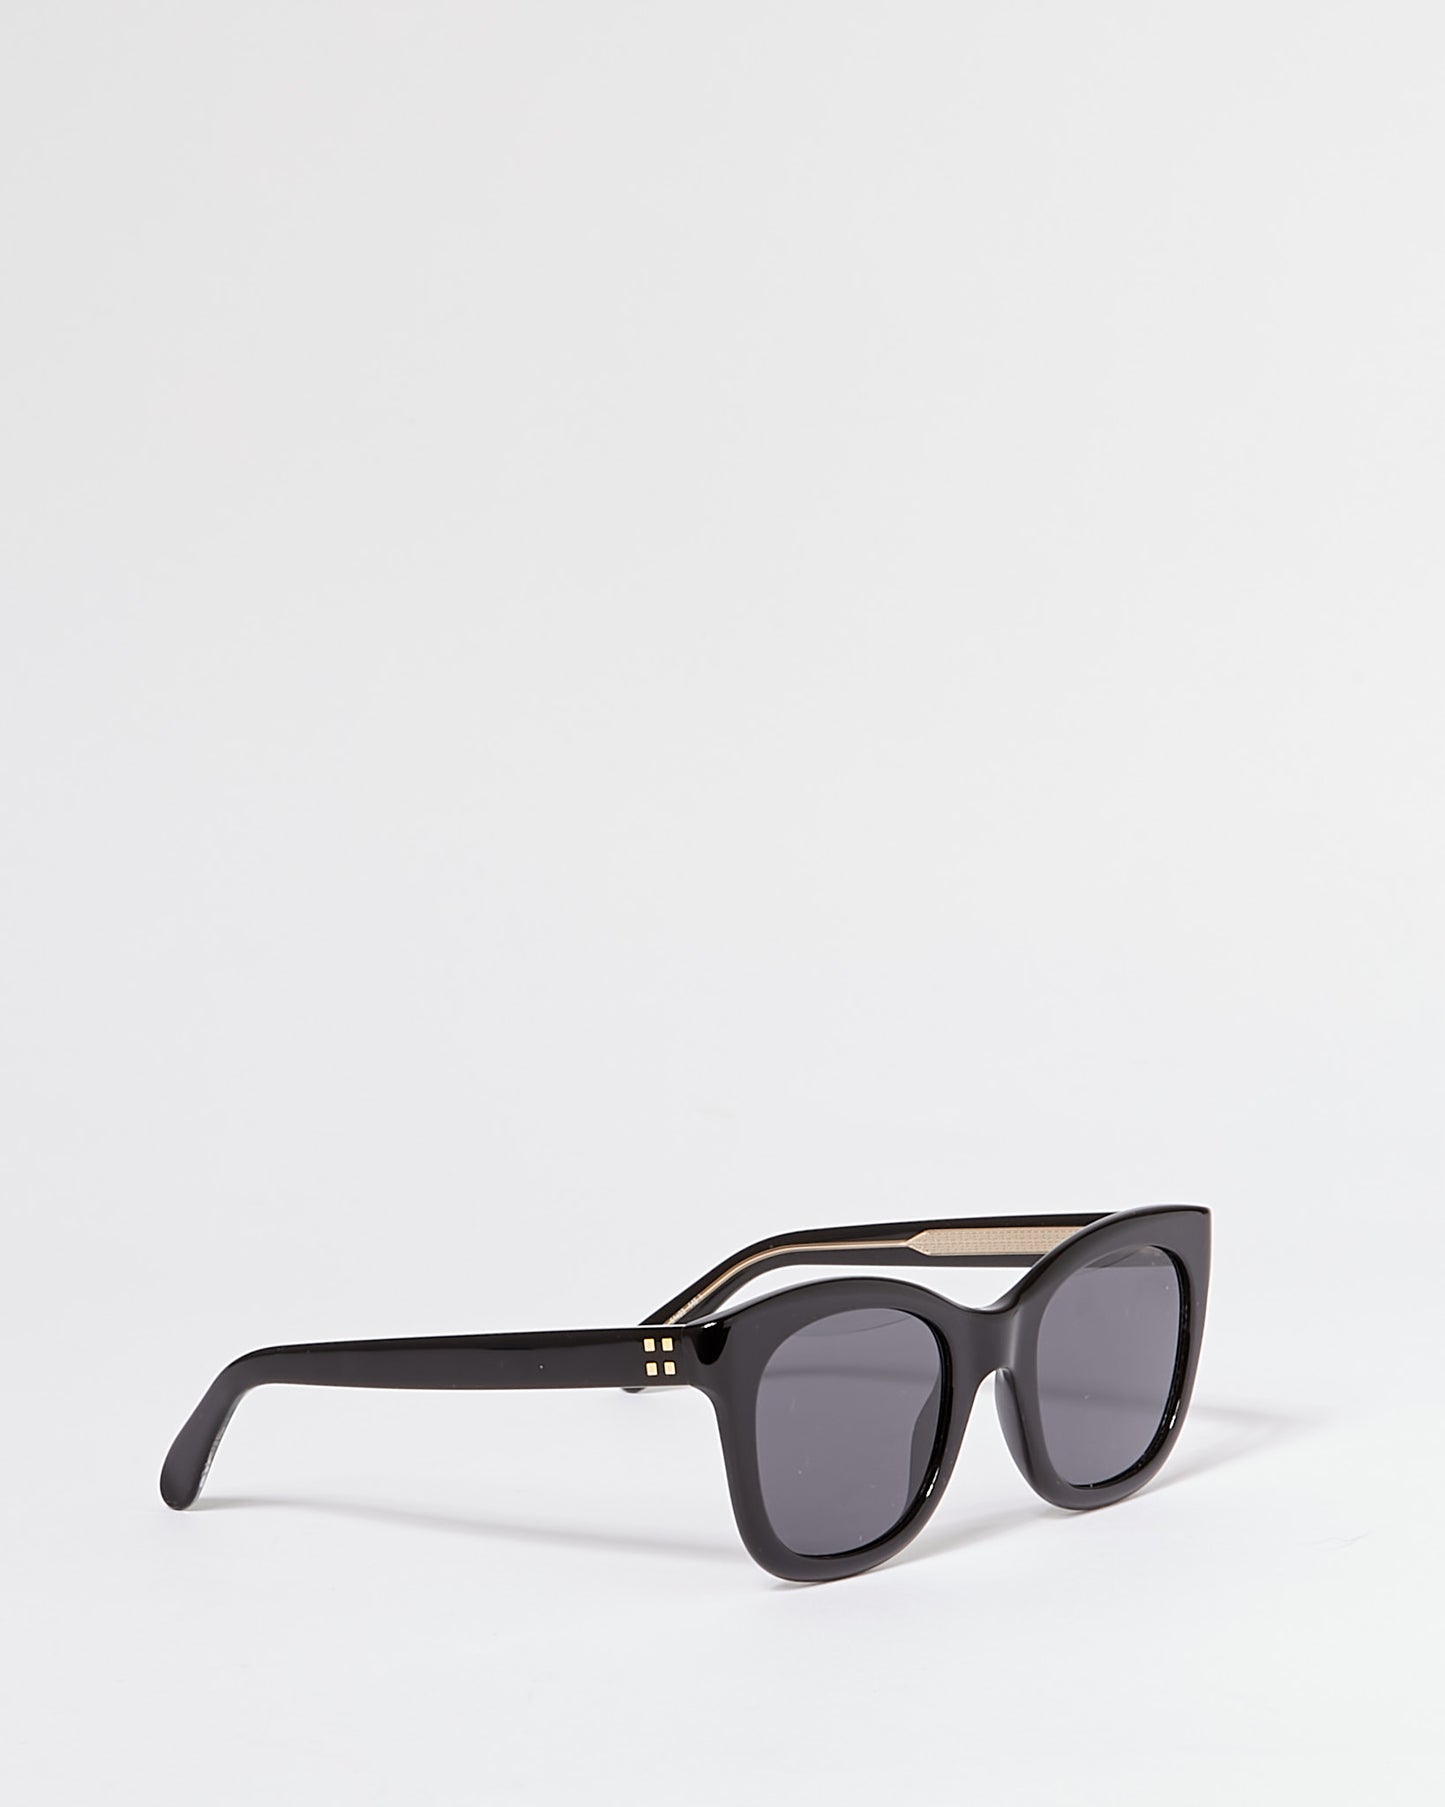 Givenchy Black Square GV7103S Sunglasses